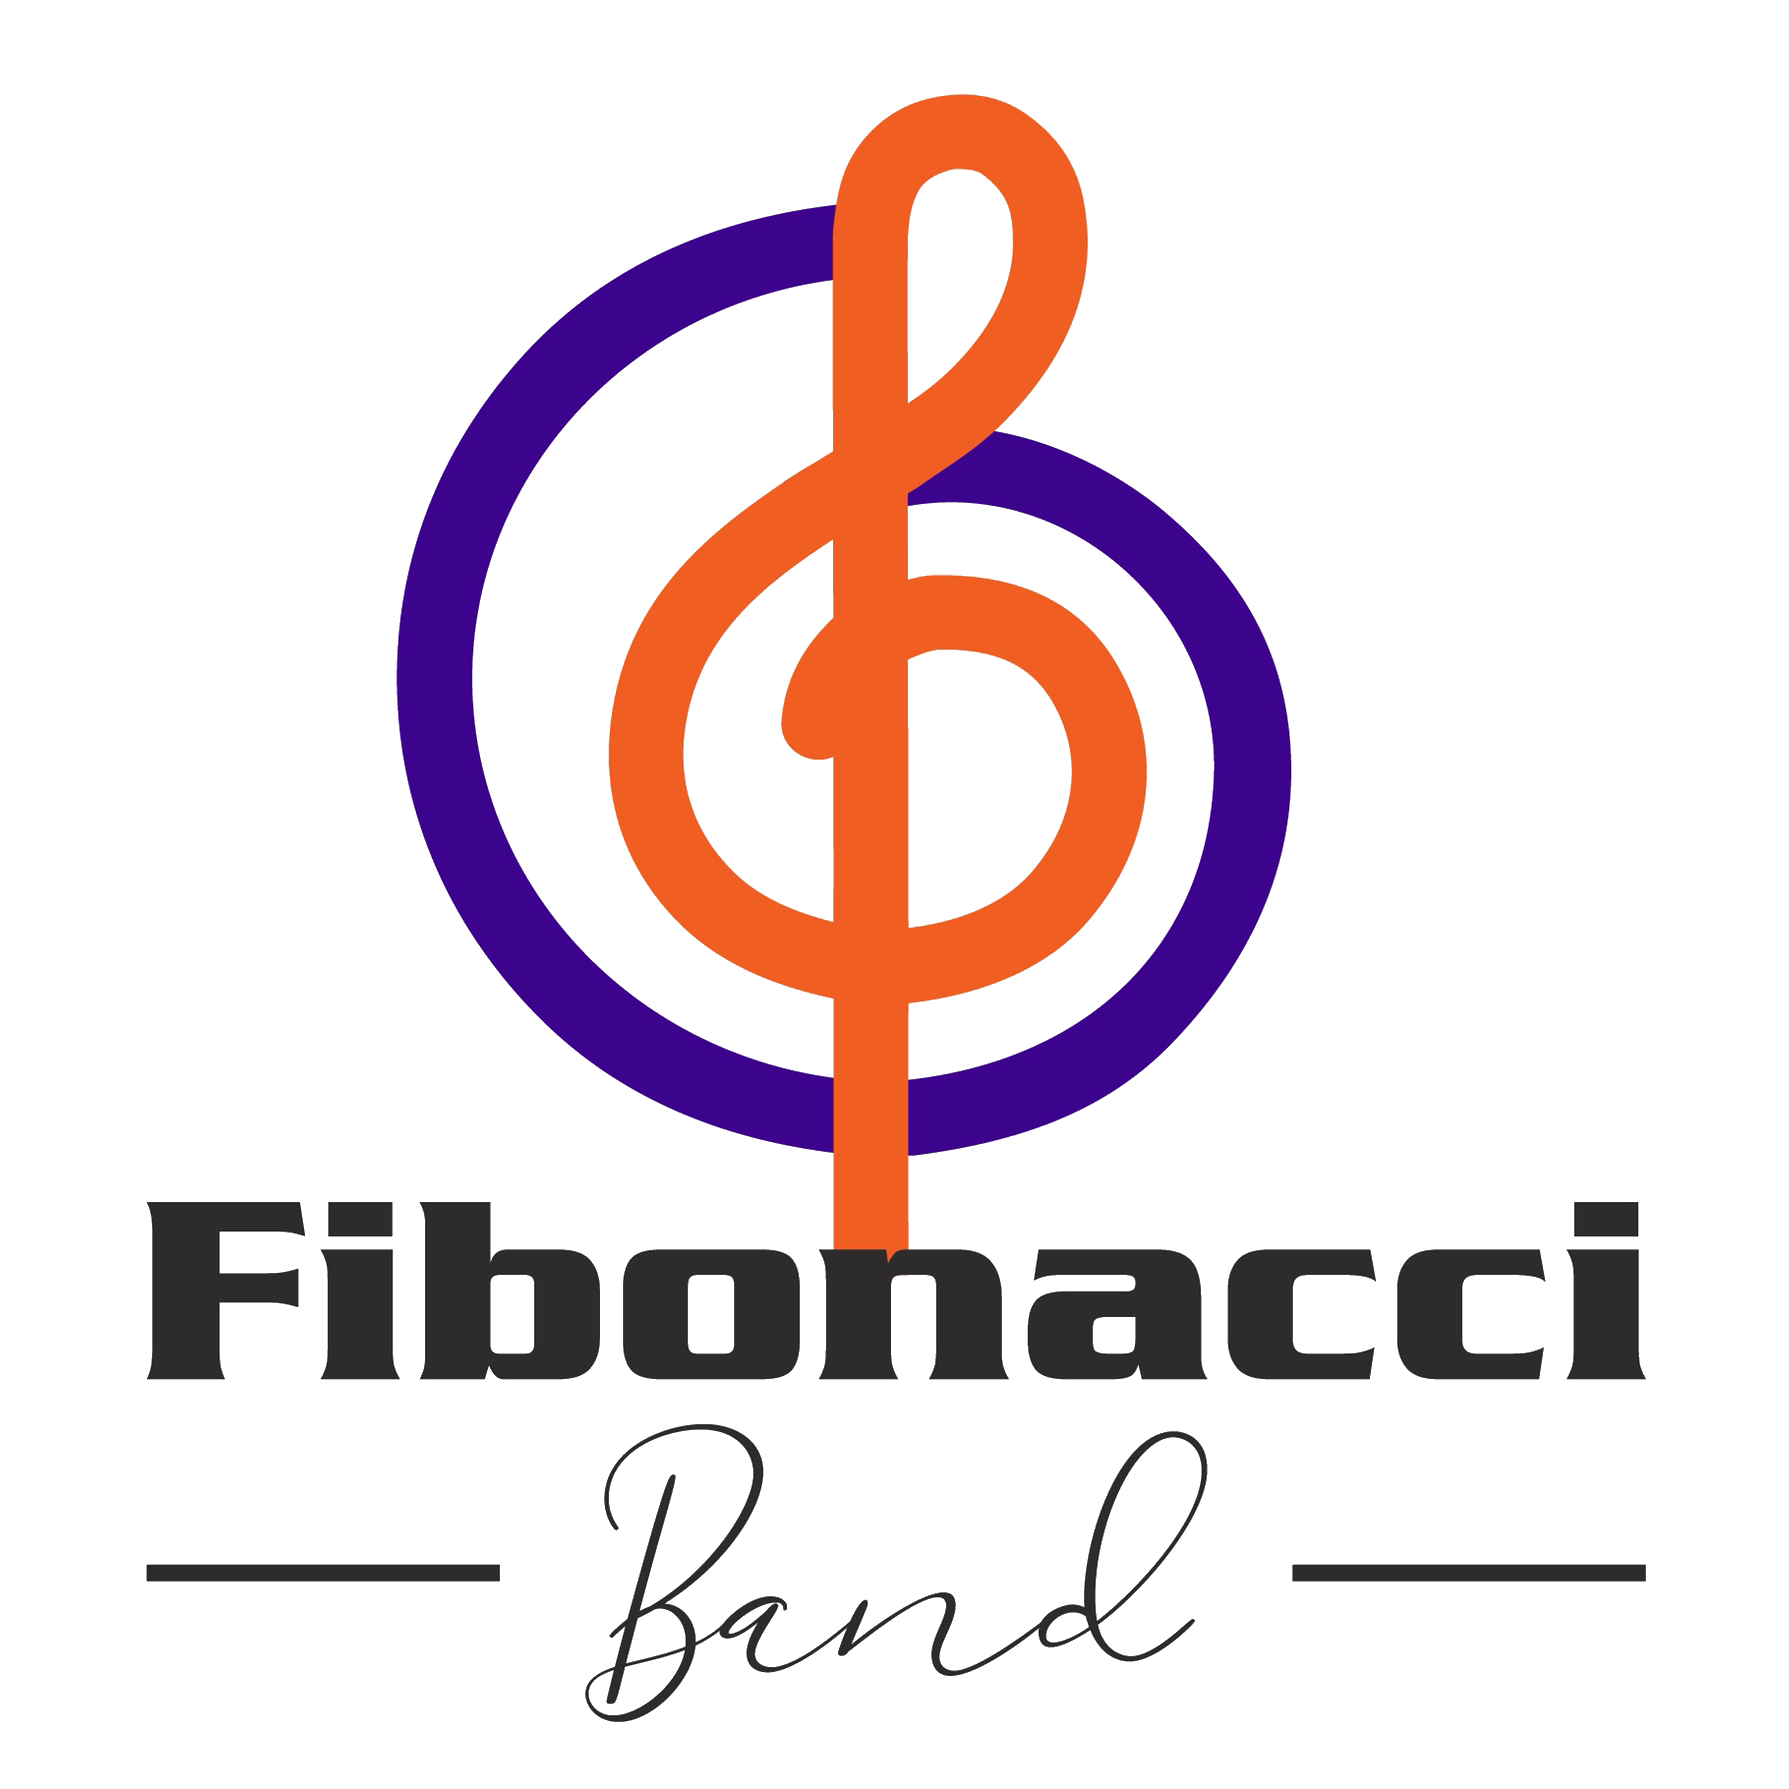 Fibonacci Band Logo